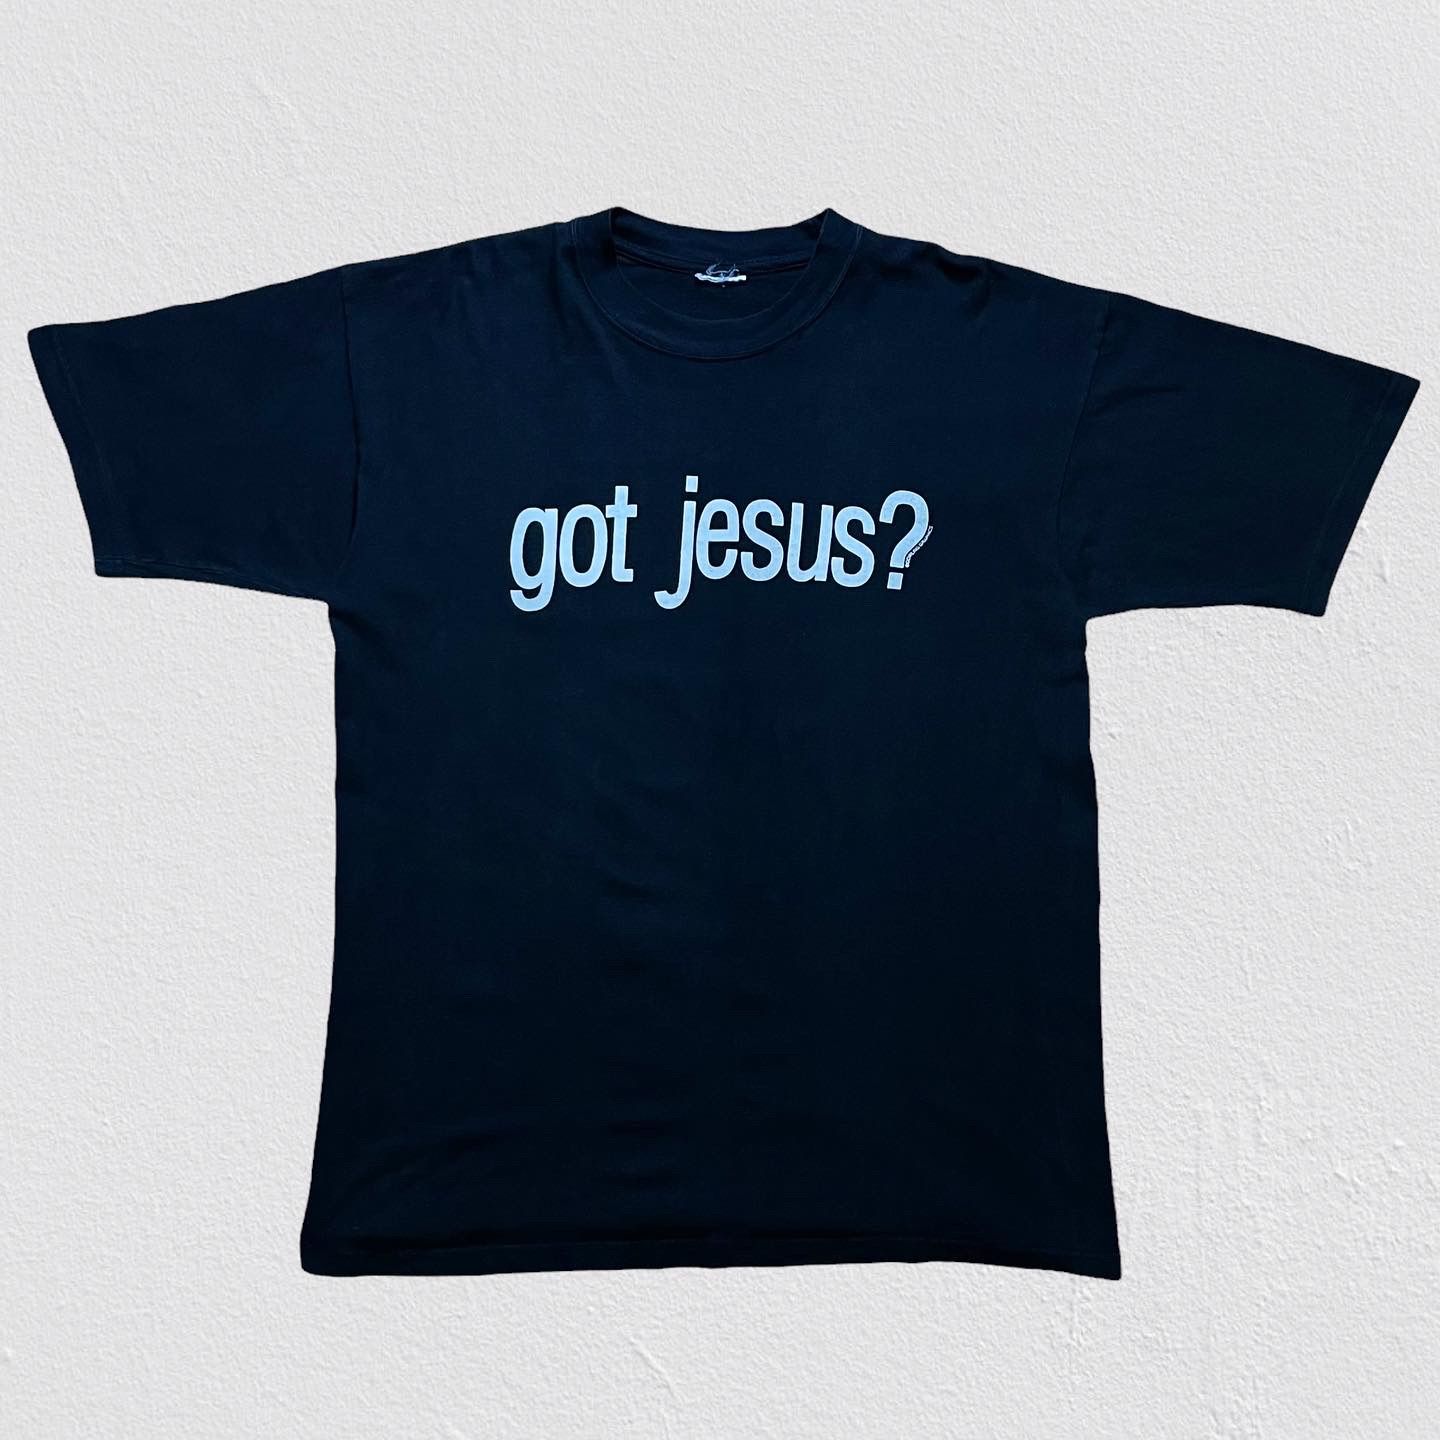 90's “got jesus?” message tee - curb - メルカリ